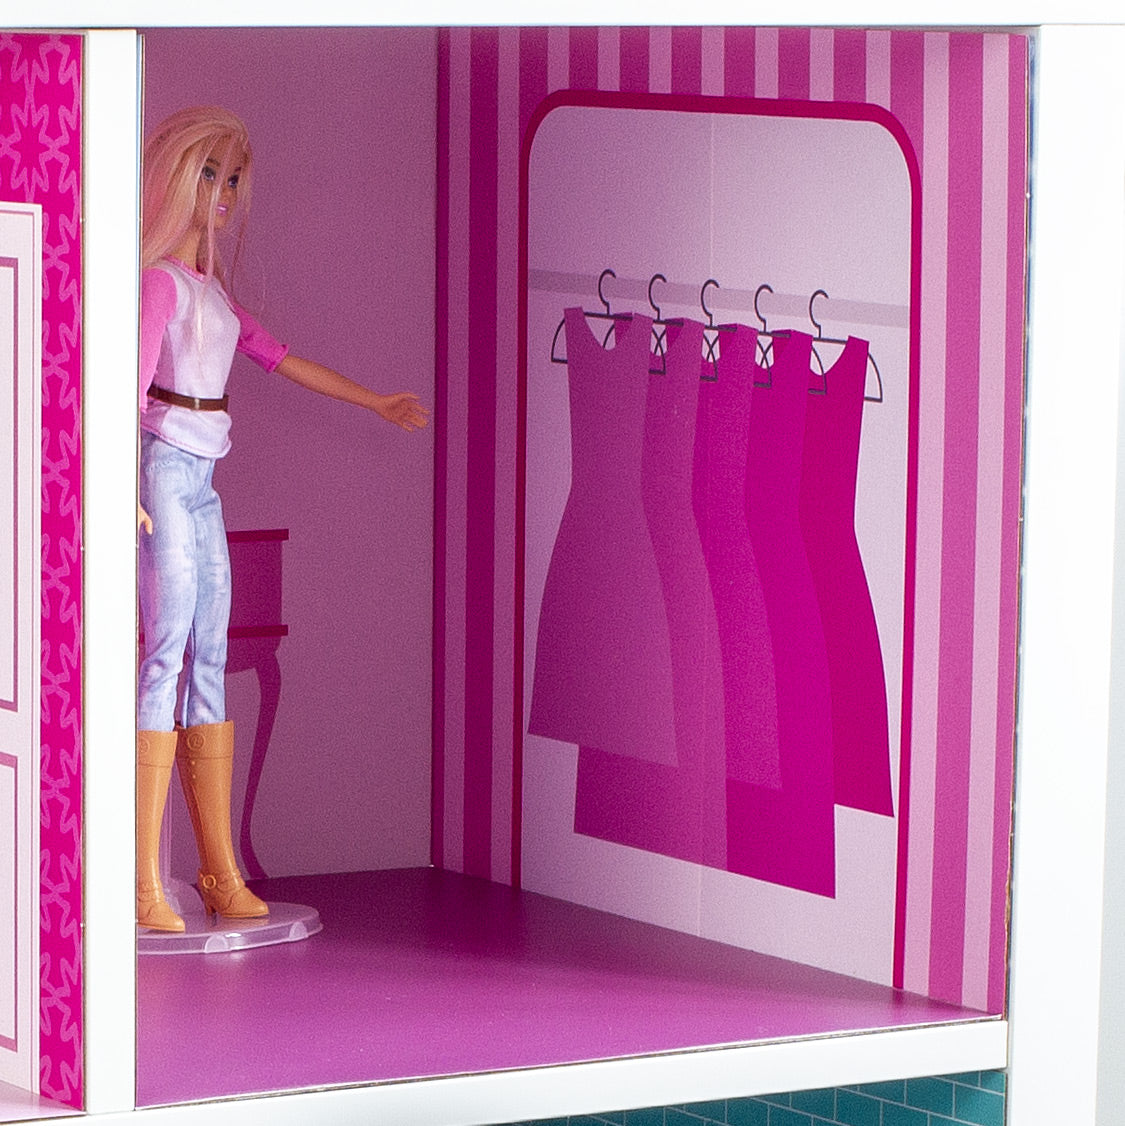 Funserts Kallax Inserts - Ultimate Dollhouse Bundle - for Ikea® Kallax